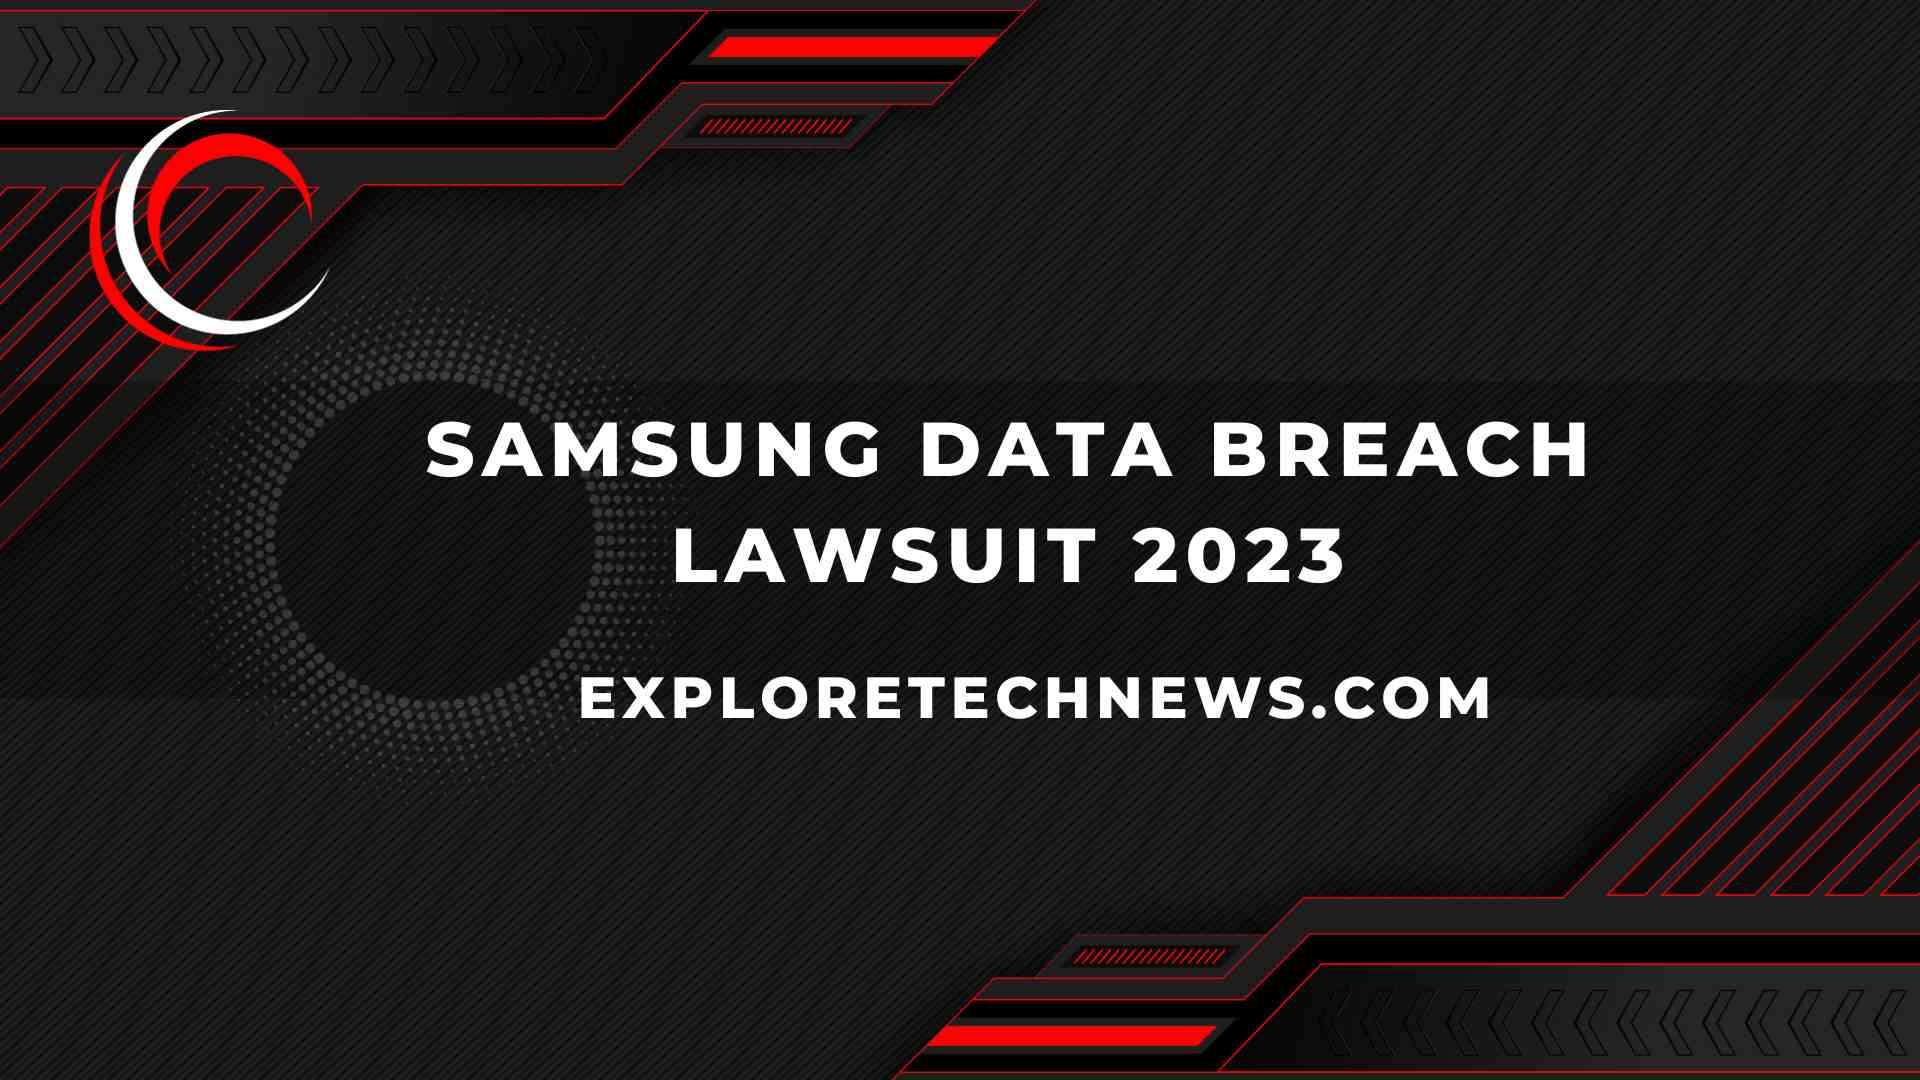 Samsung Data Breach Lawsuit 2023